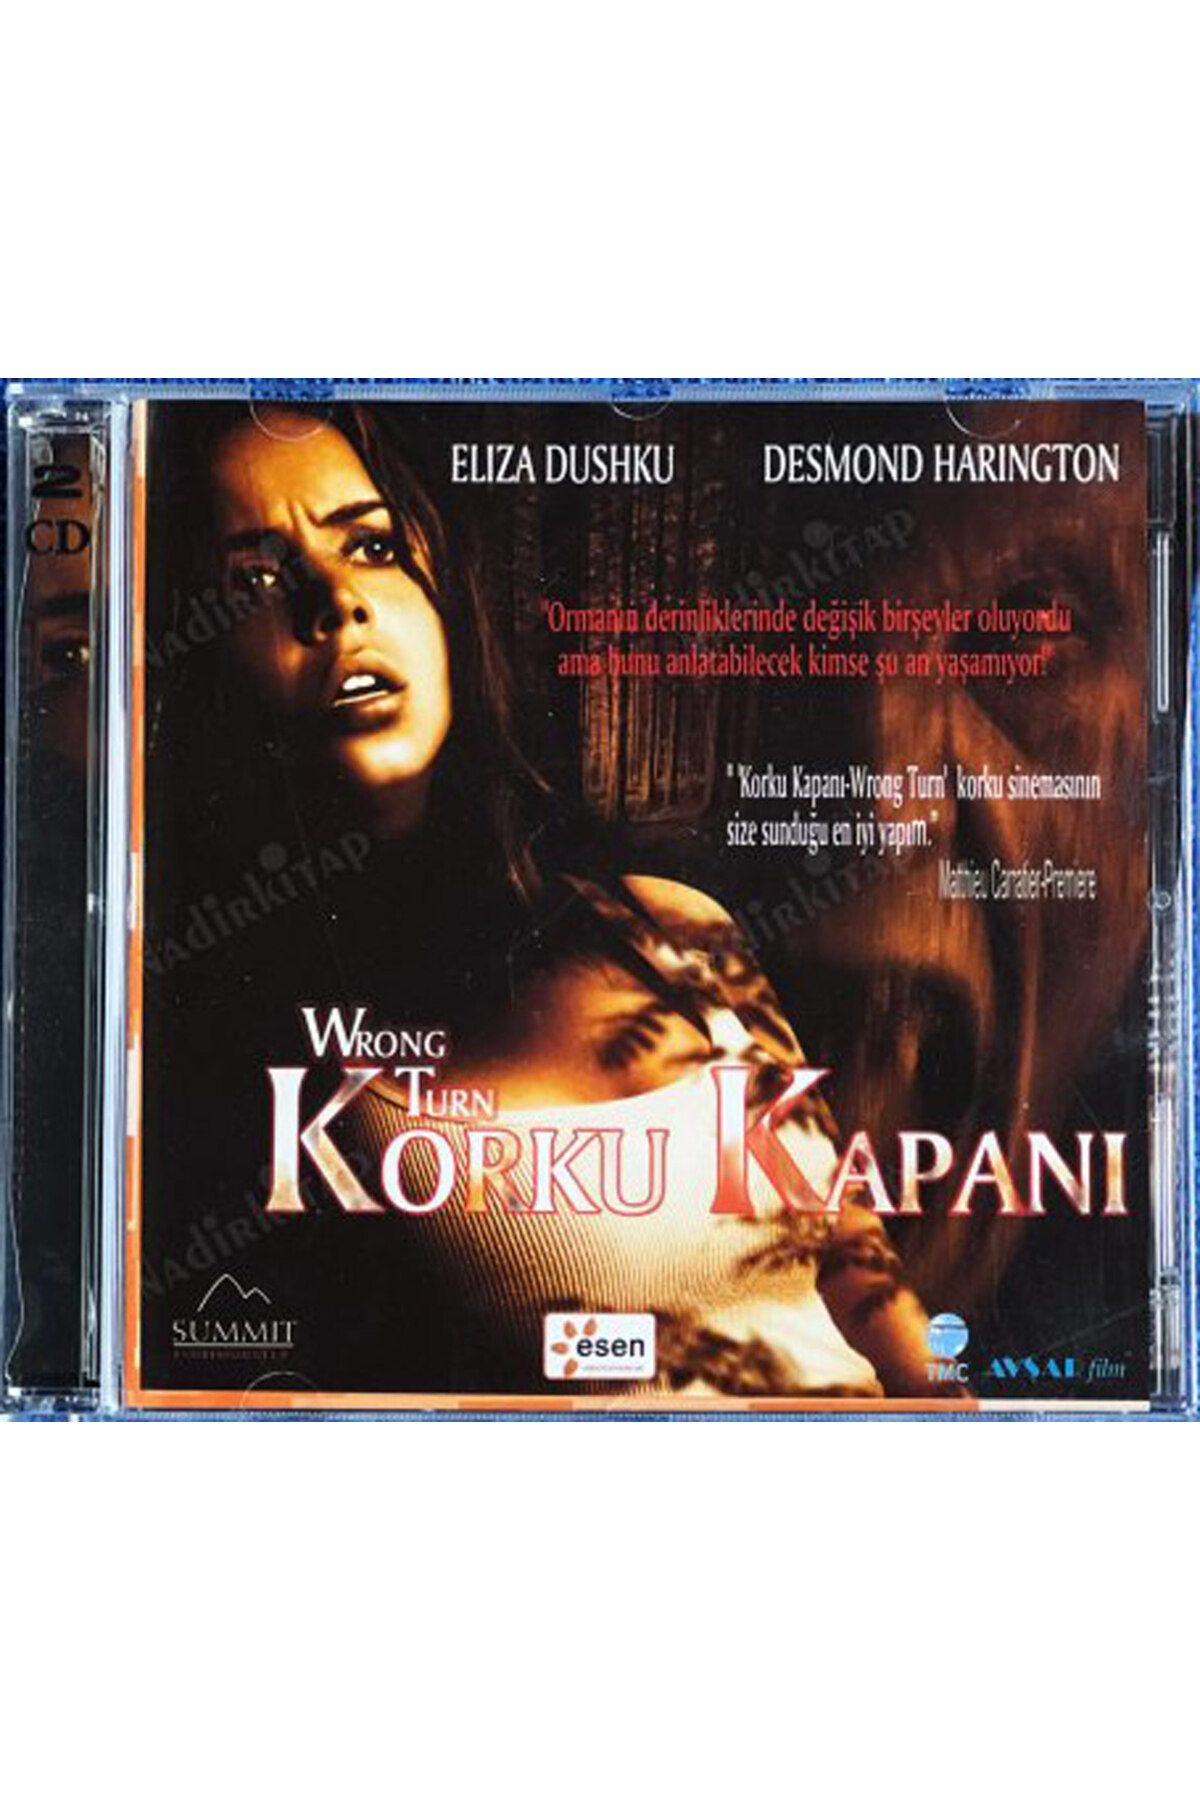 Kovak Kailyn Korku Kapanı (2003) VCD Film